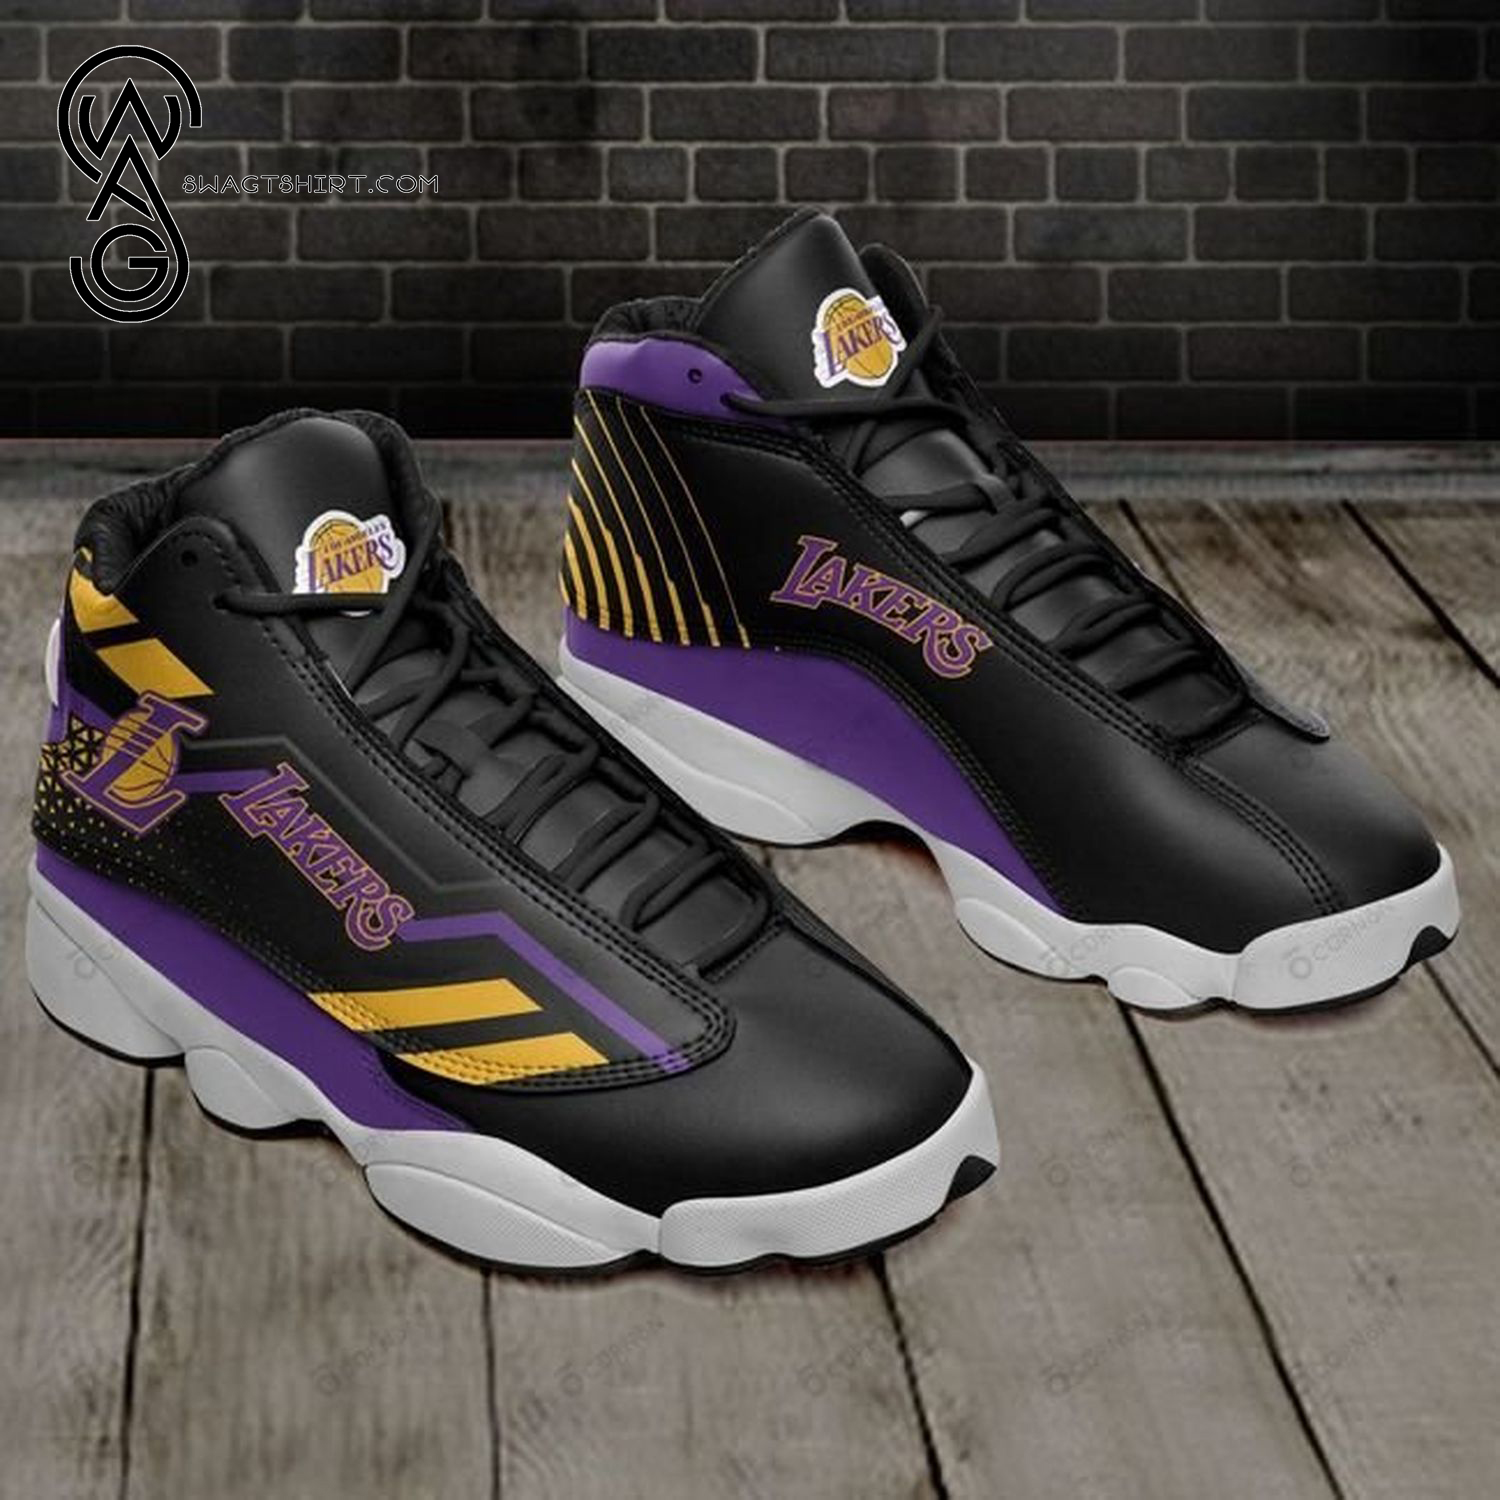 Los Angeles Lakers Basketball Air Jordan 13 Shoes